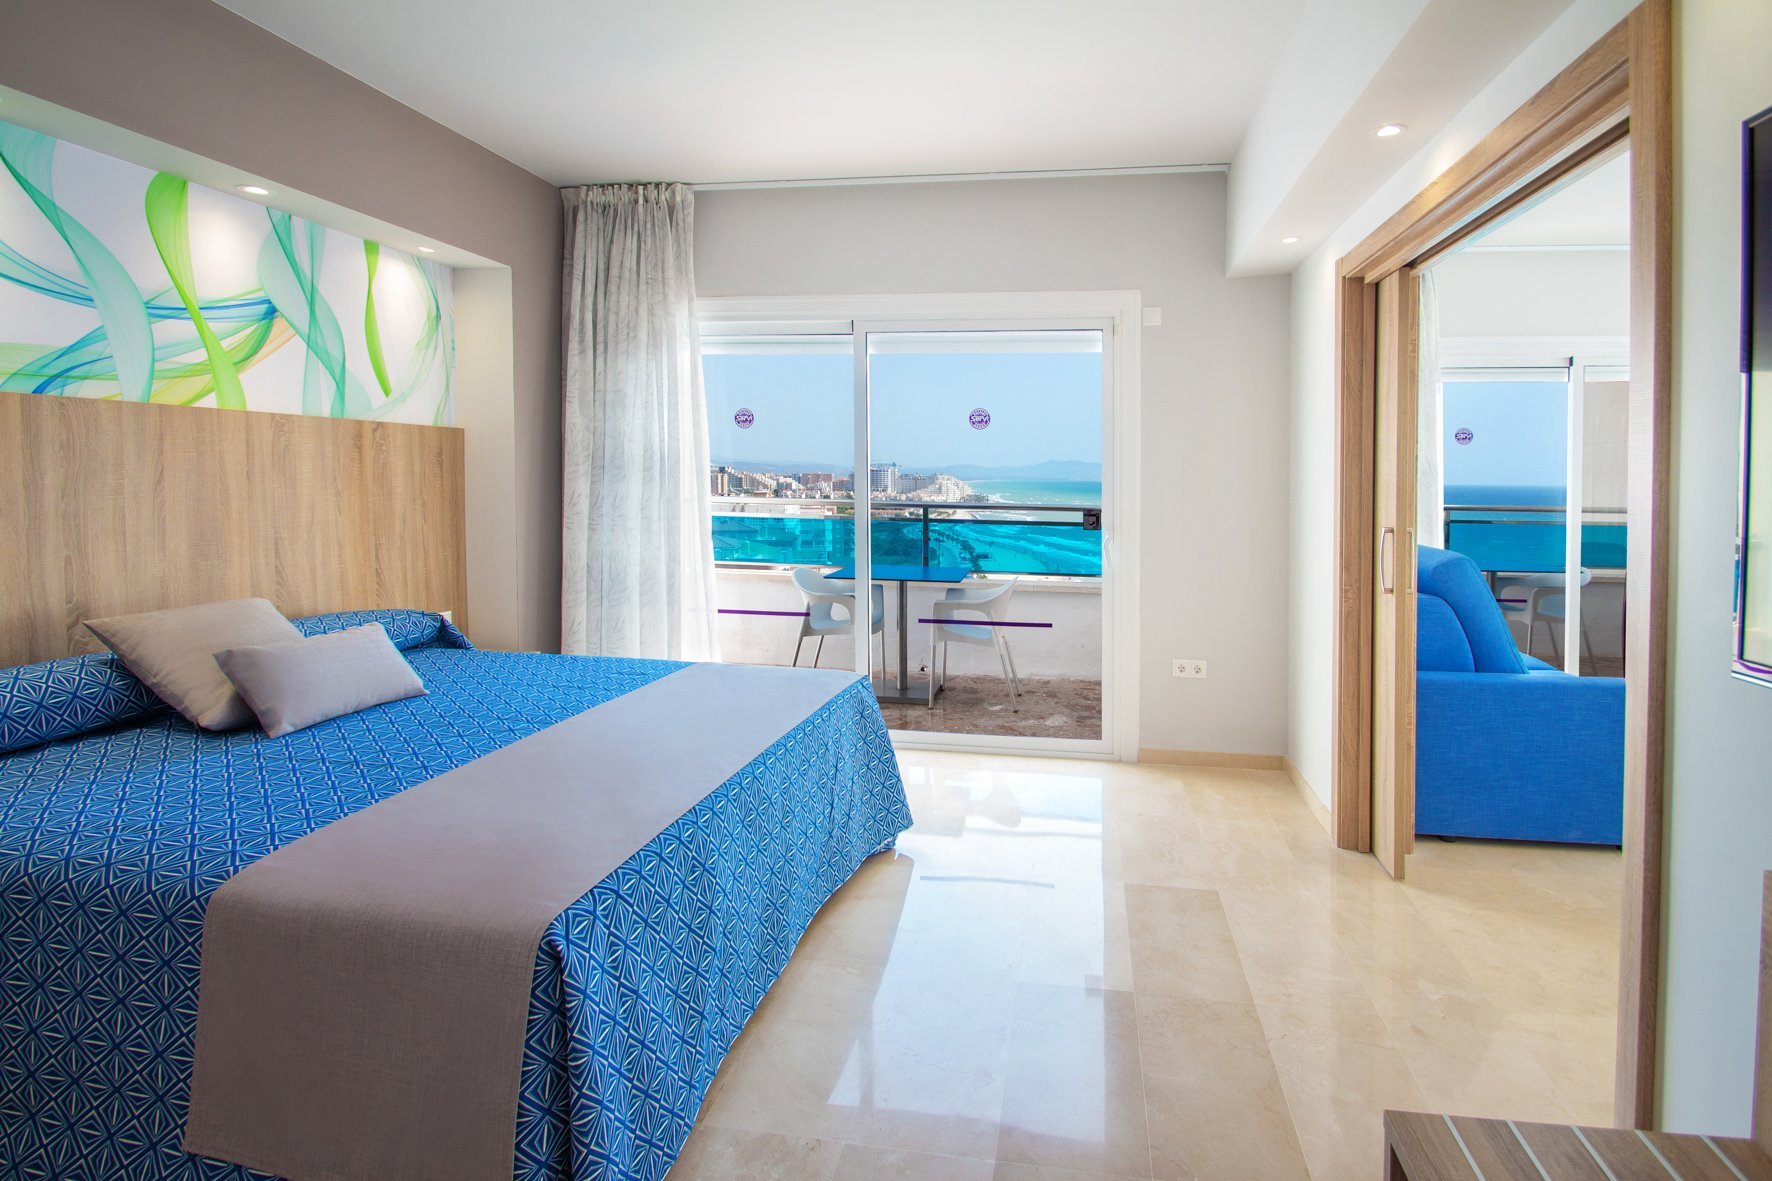 05-oropesa-del-mar-hotel-koral-beach-habitacion-junior-suite-01.jpg